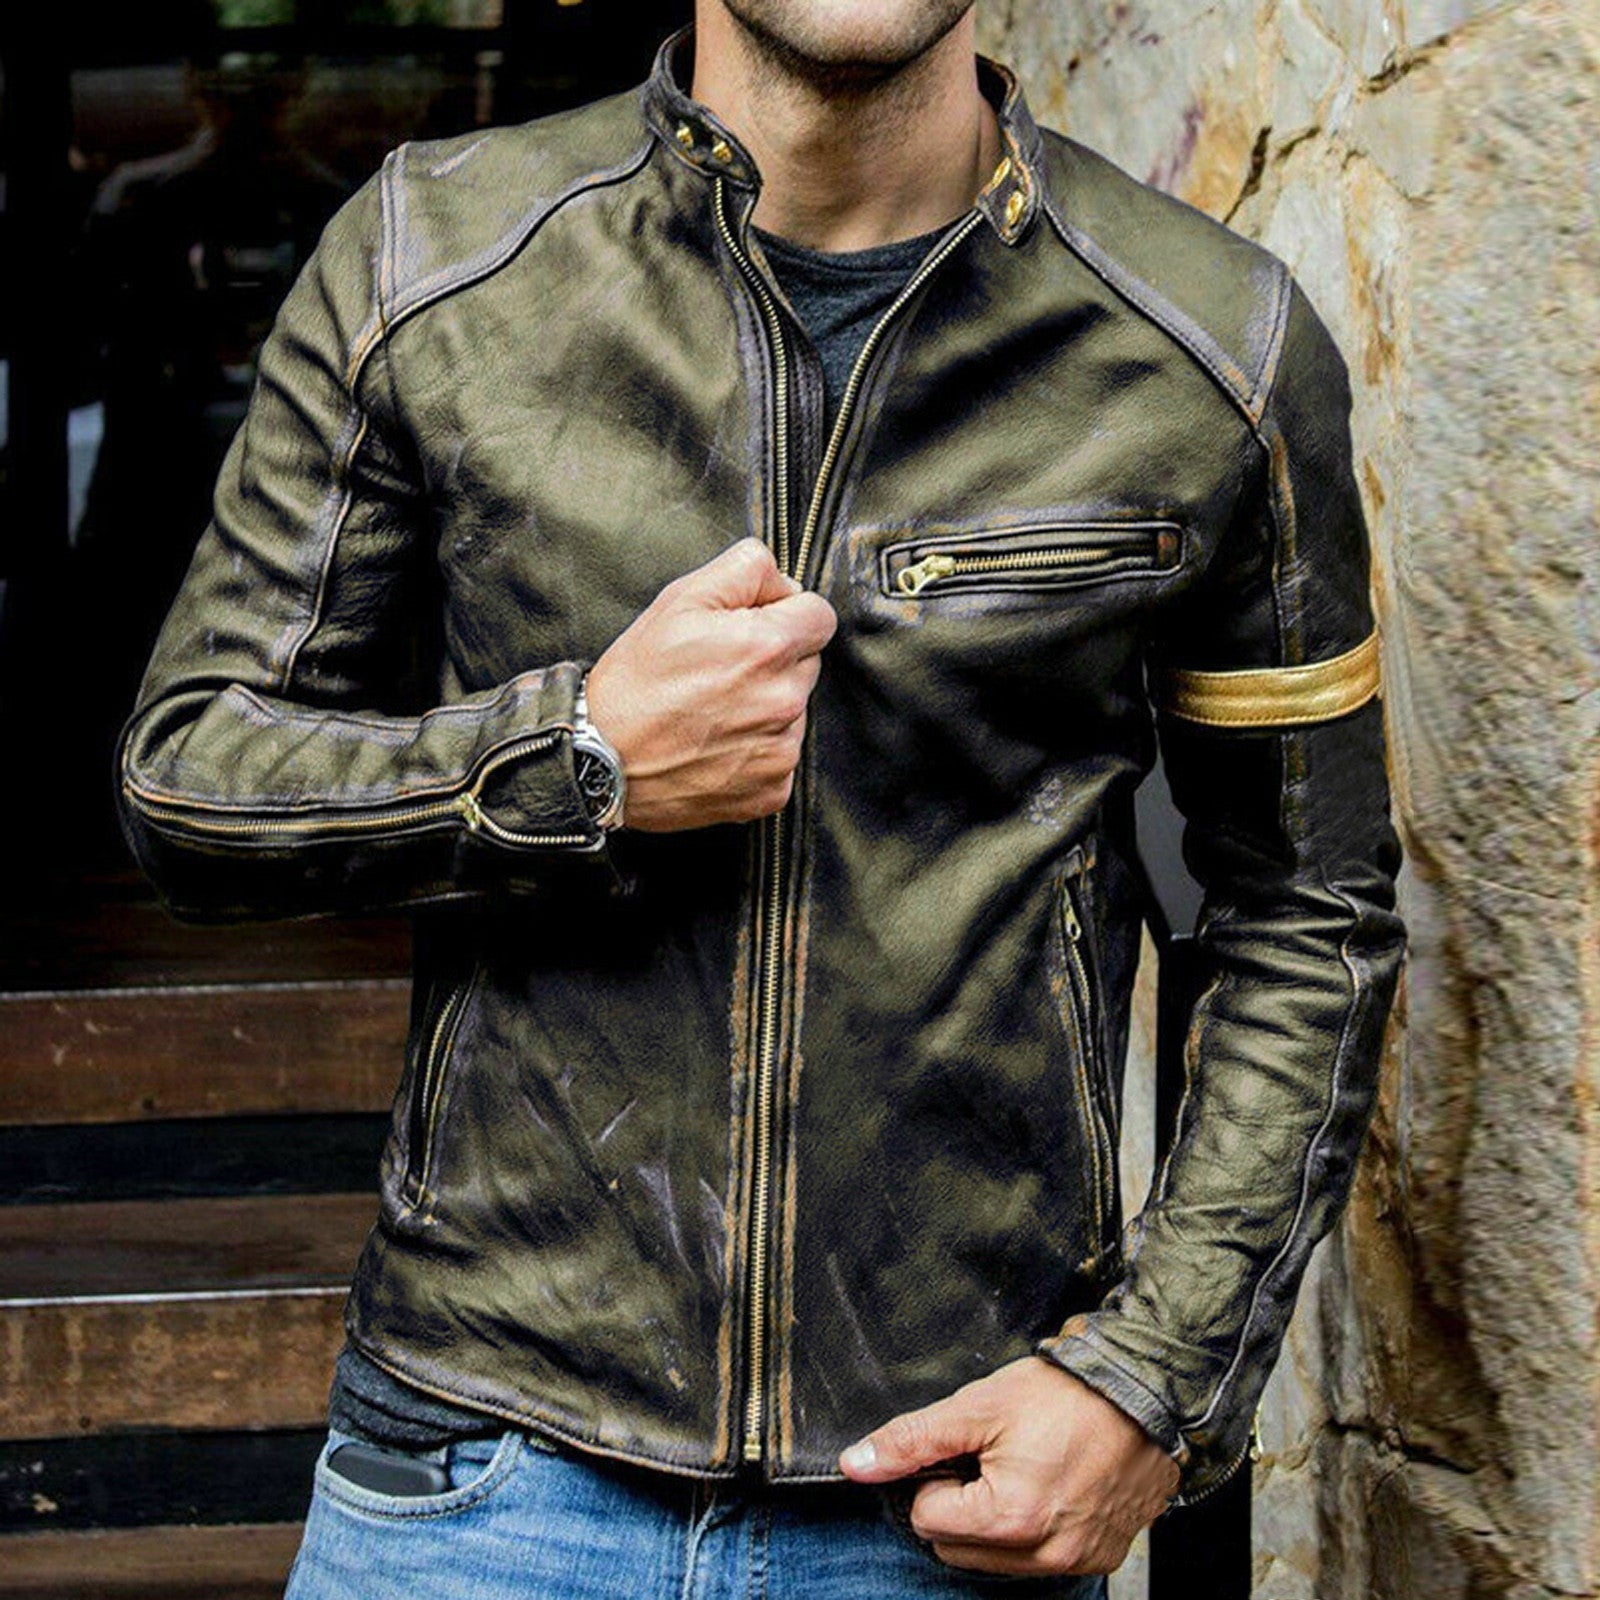 Men's Autumn Fashion Pure Color Stand Collar Imitation Leather Jacket Coat